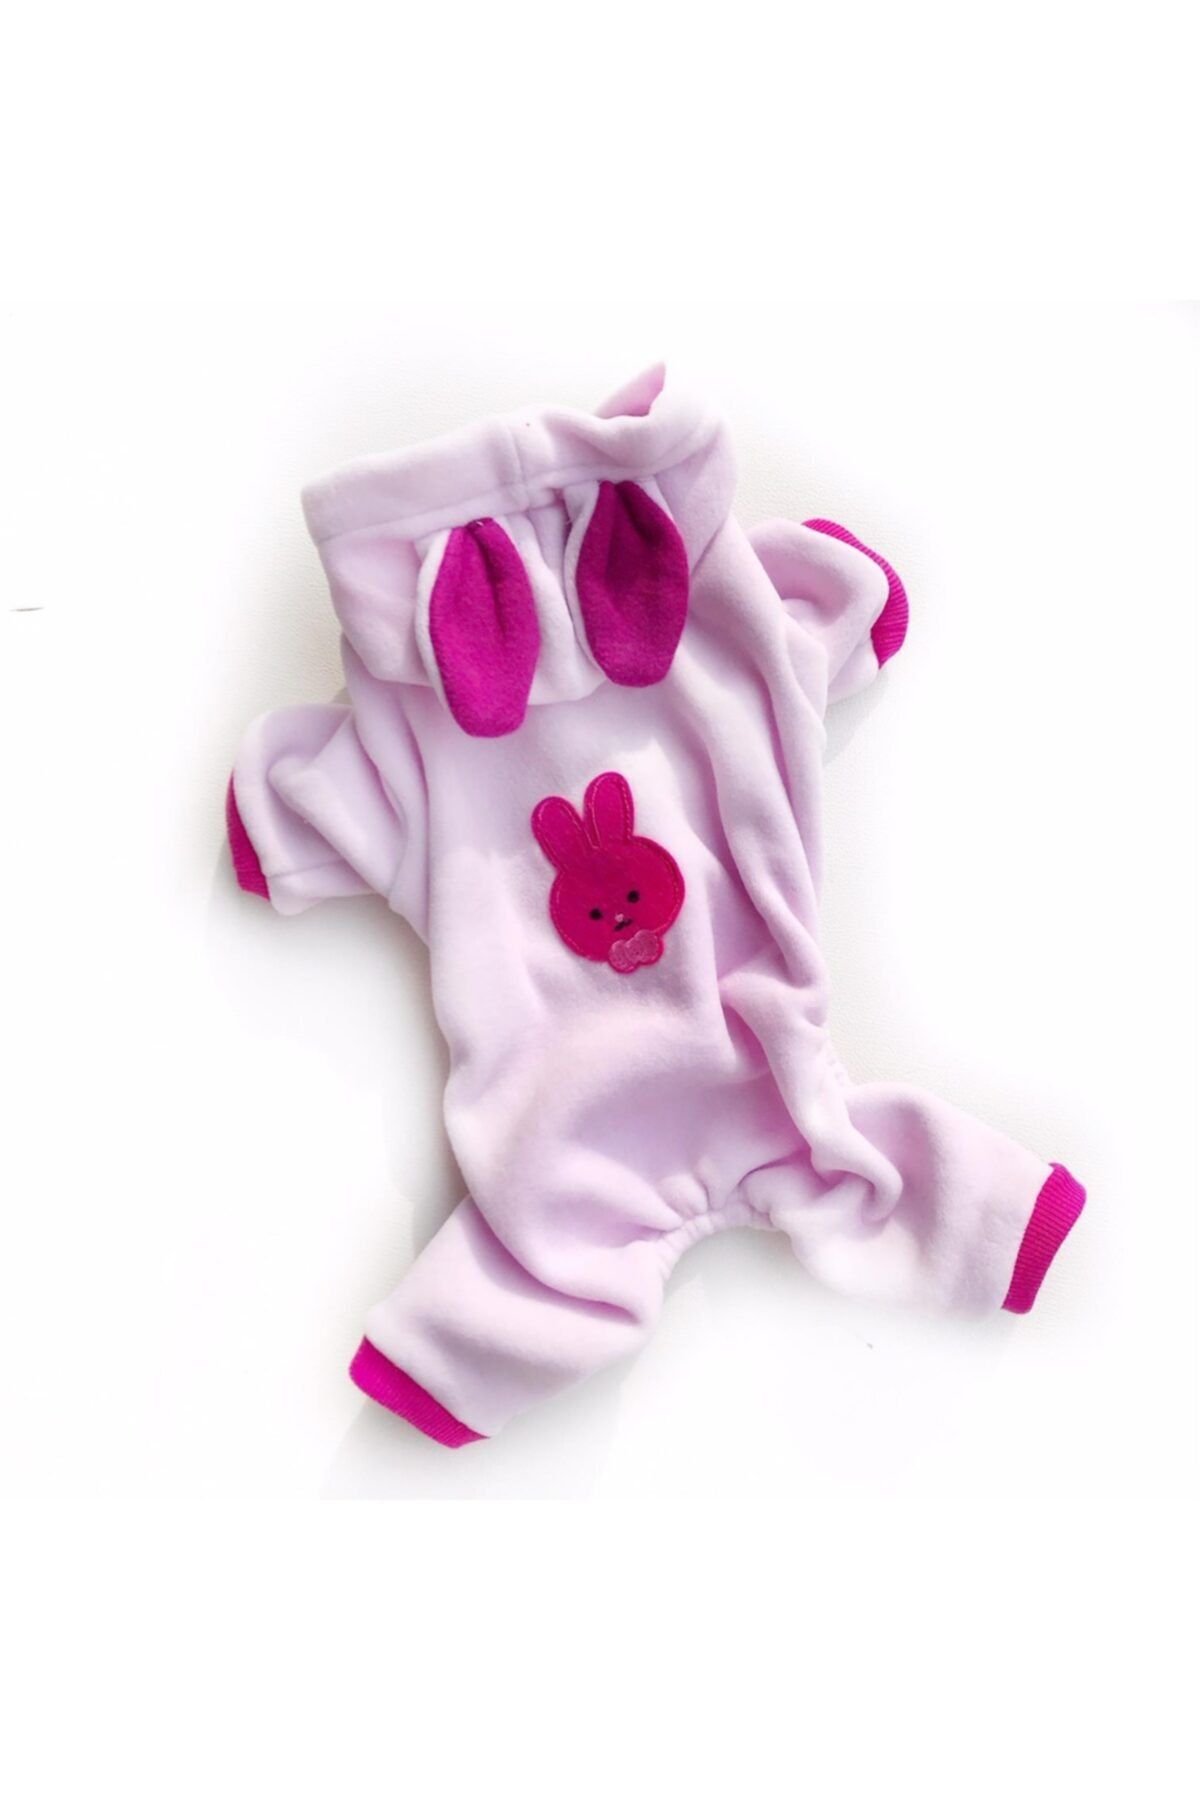 Kemique Pinky Pink Bunny Kedi Tulumu Kedi Kıyafeti (2xlarge / 5,5 - 7 Kg )